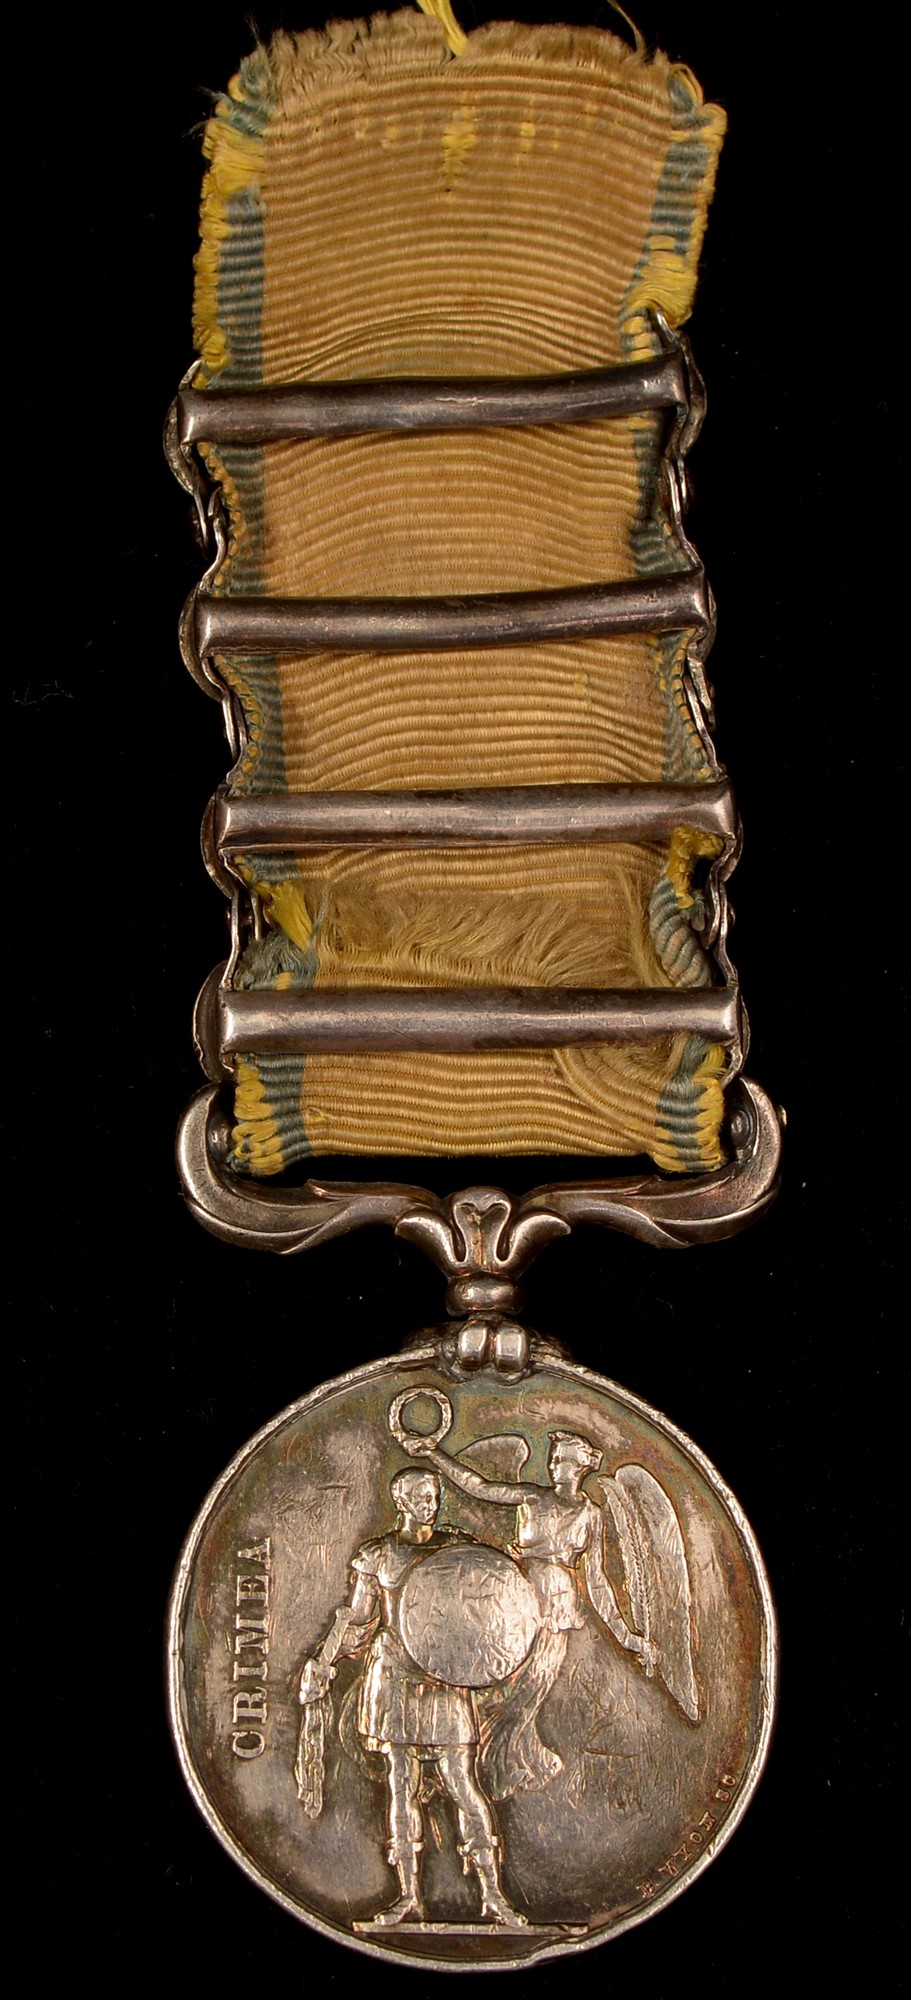 Crimea medal - Image 2 of 2